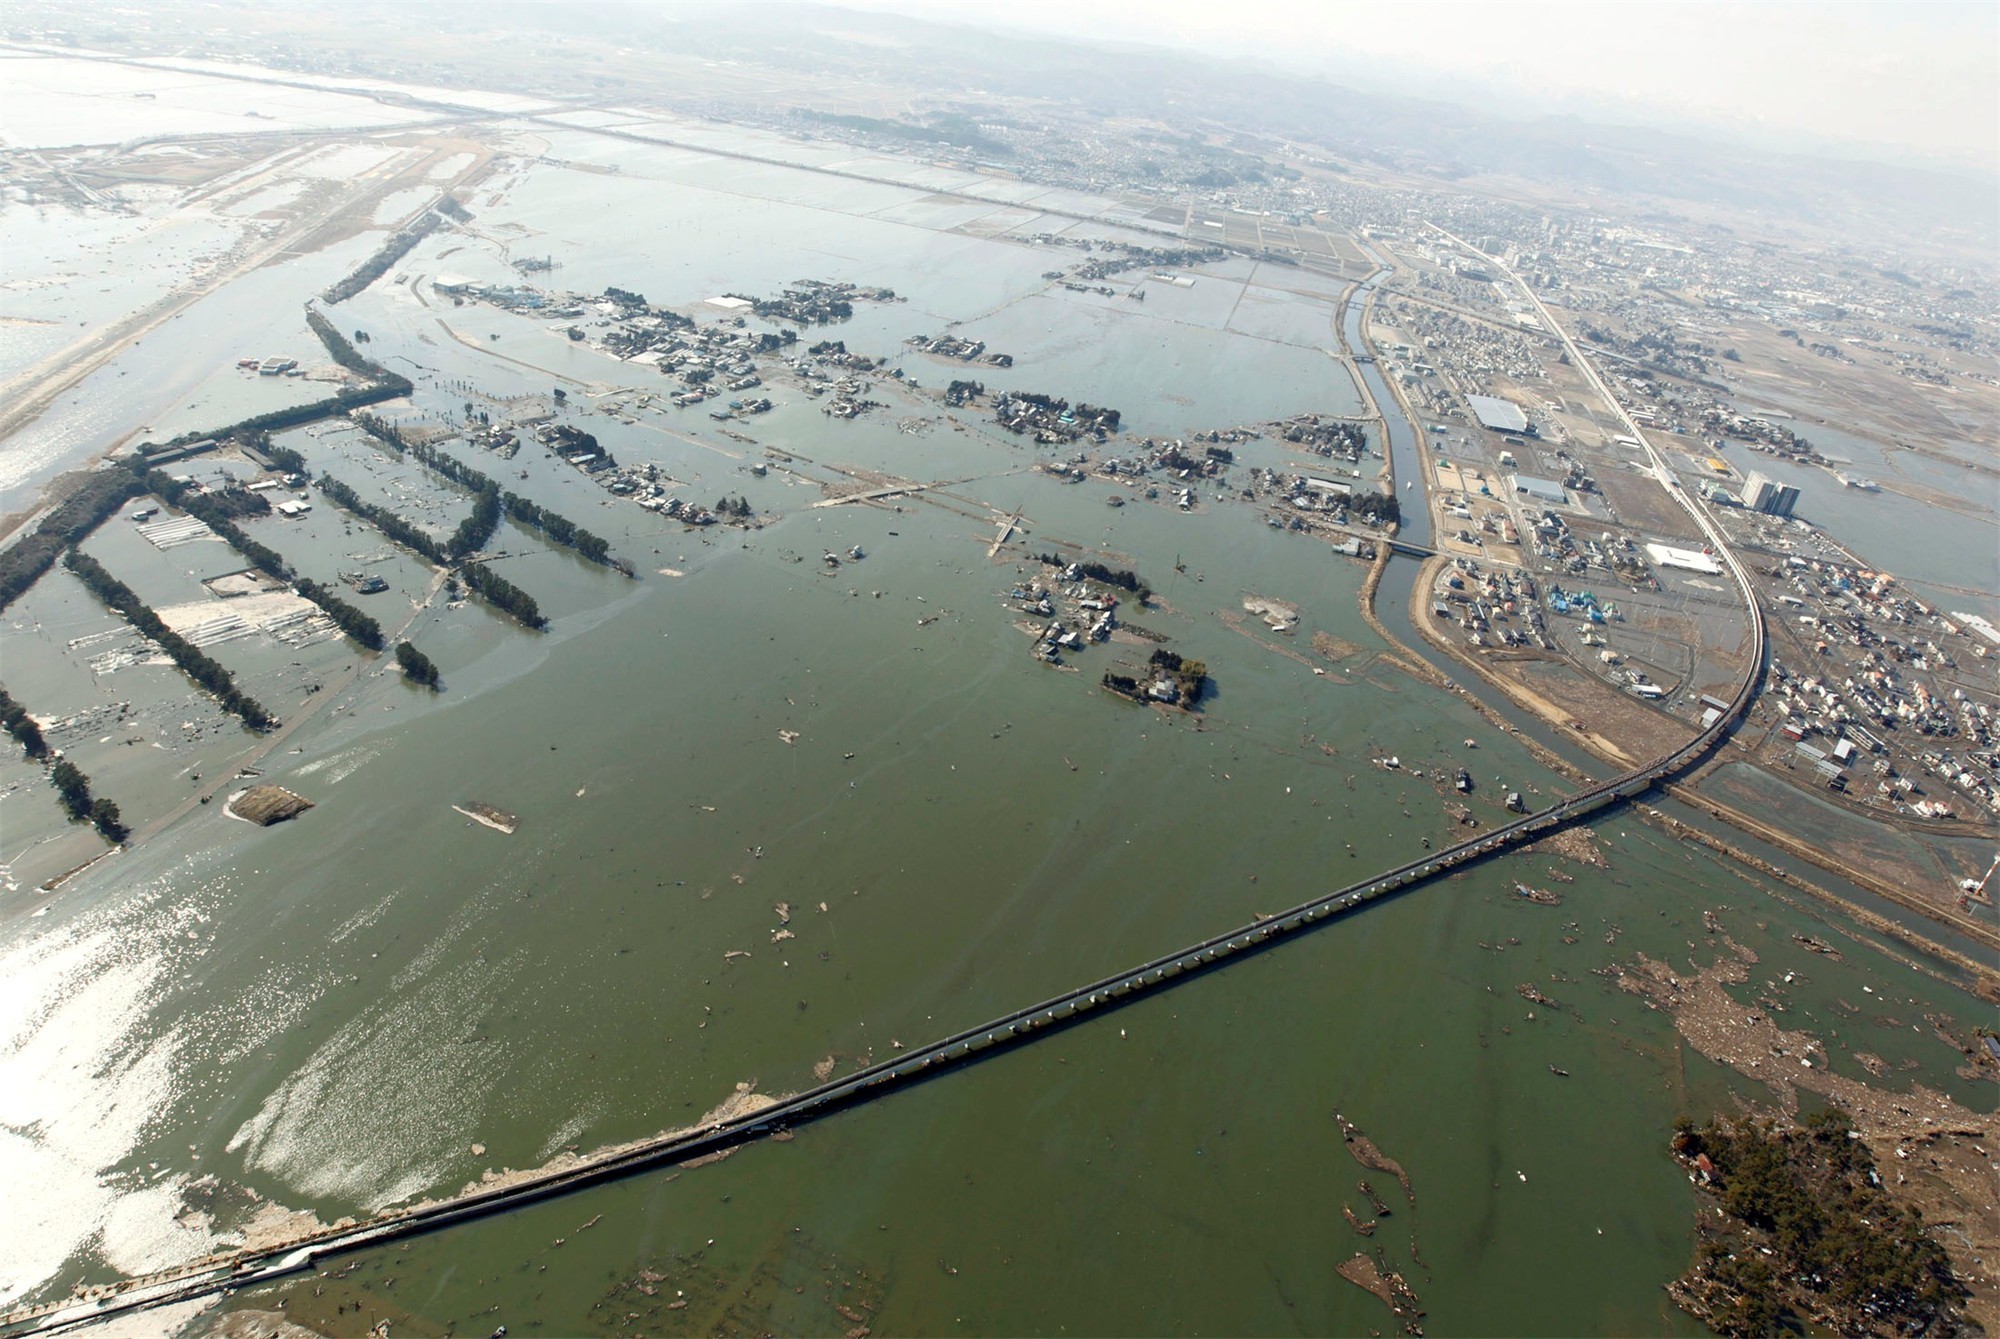 General 2000x1339 Japan earthquakes Asia aerial view flood